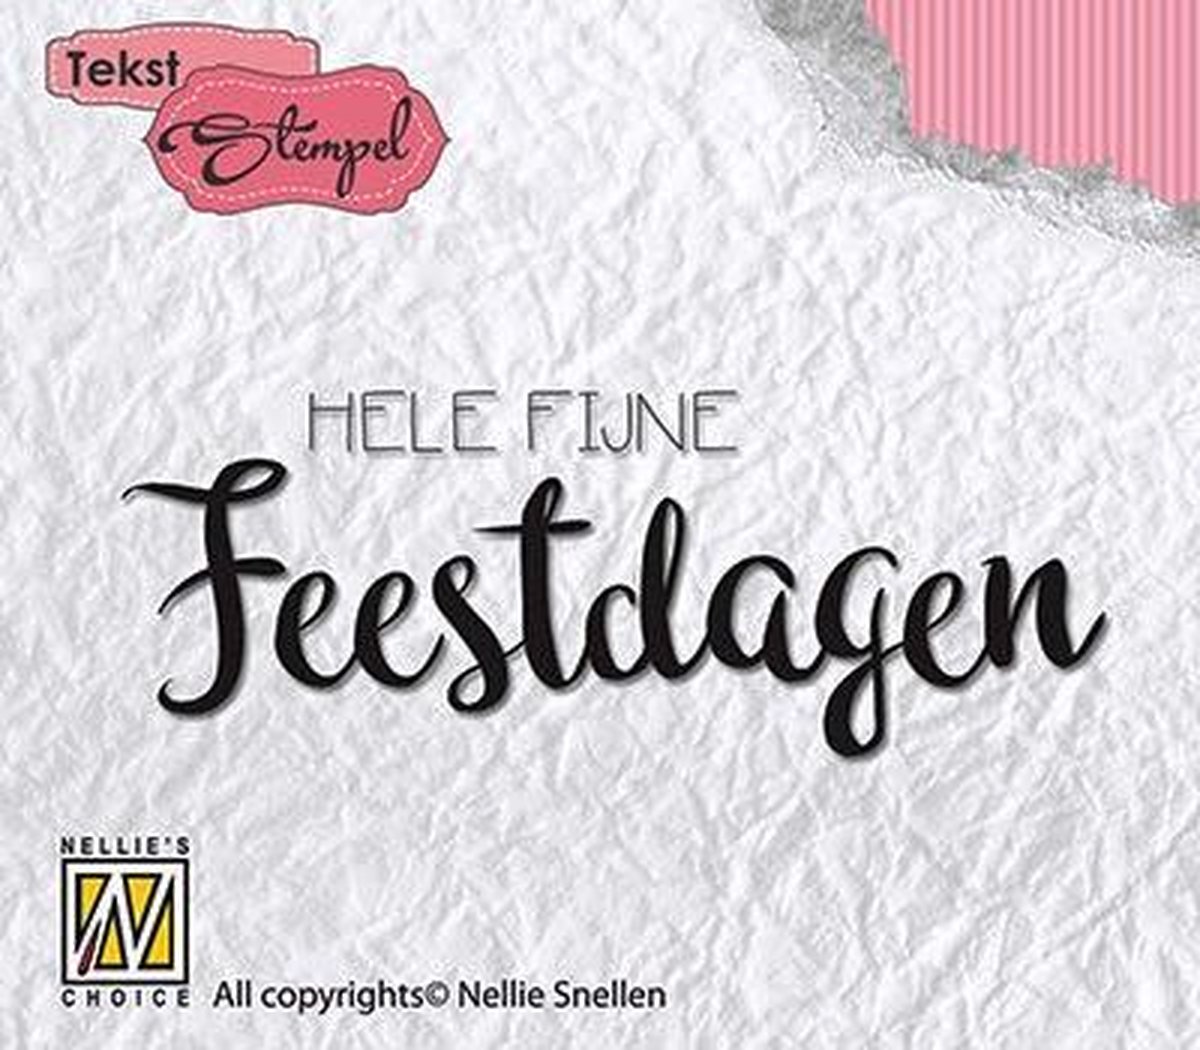 Stempel Nederlandse Tekst - Hele fijne Feestdagen | bol.com